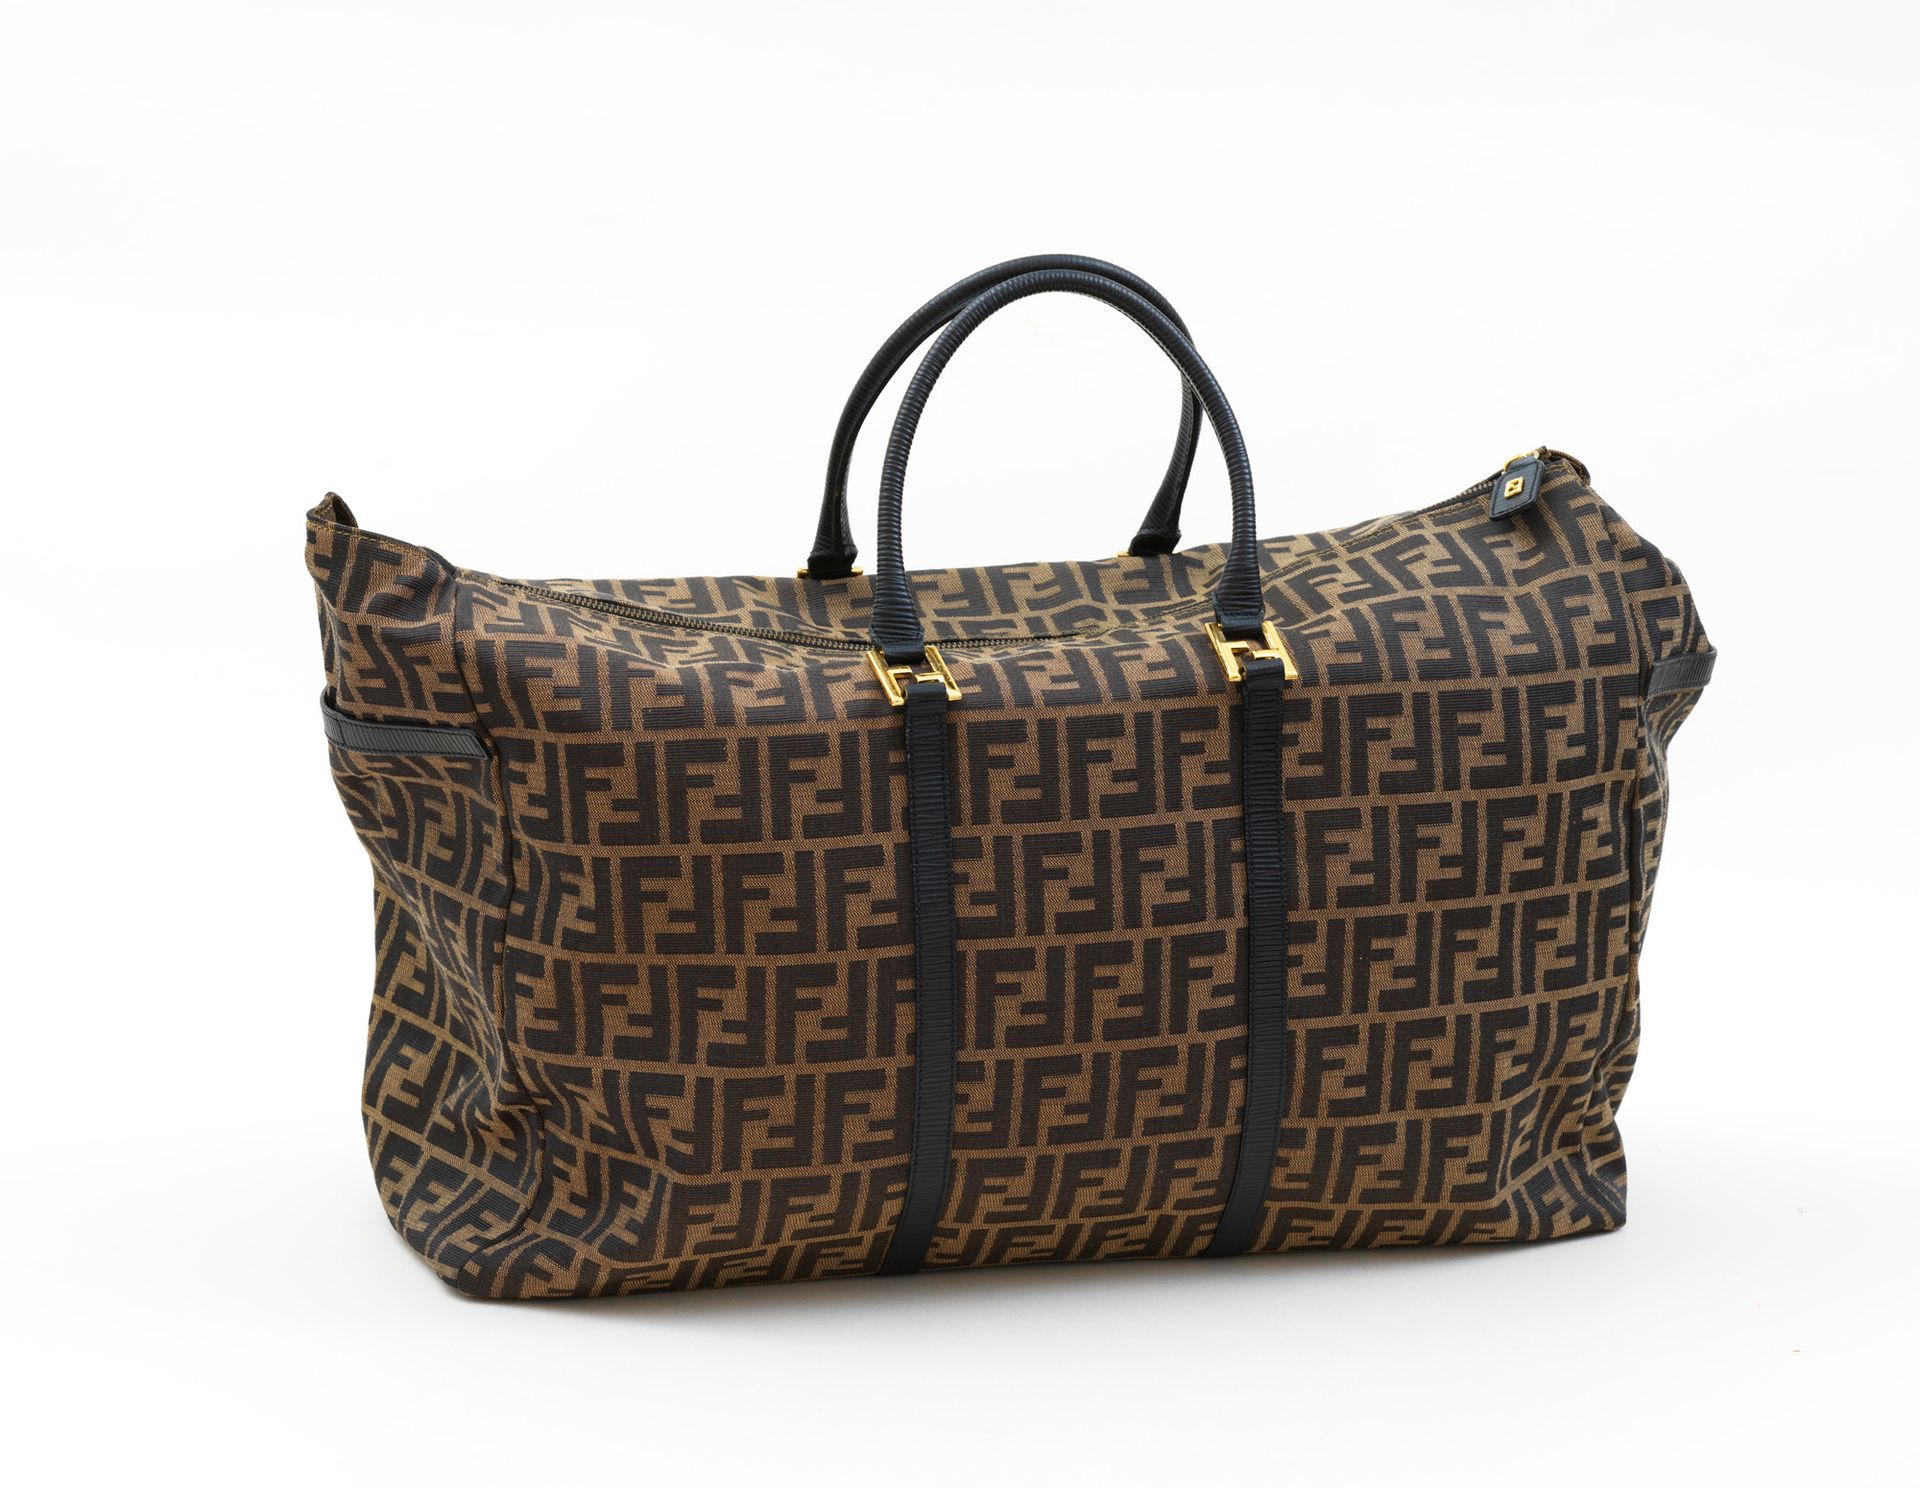 Fendi FENDI - 旅行袋，有字母图案的织物和黑色粒面革 - 内有米色金色织物 - 中央拉链开合 - 尺寸：49,5x36x17cm - 状态良好